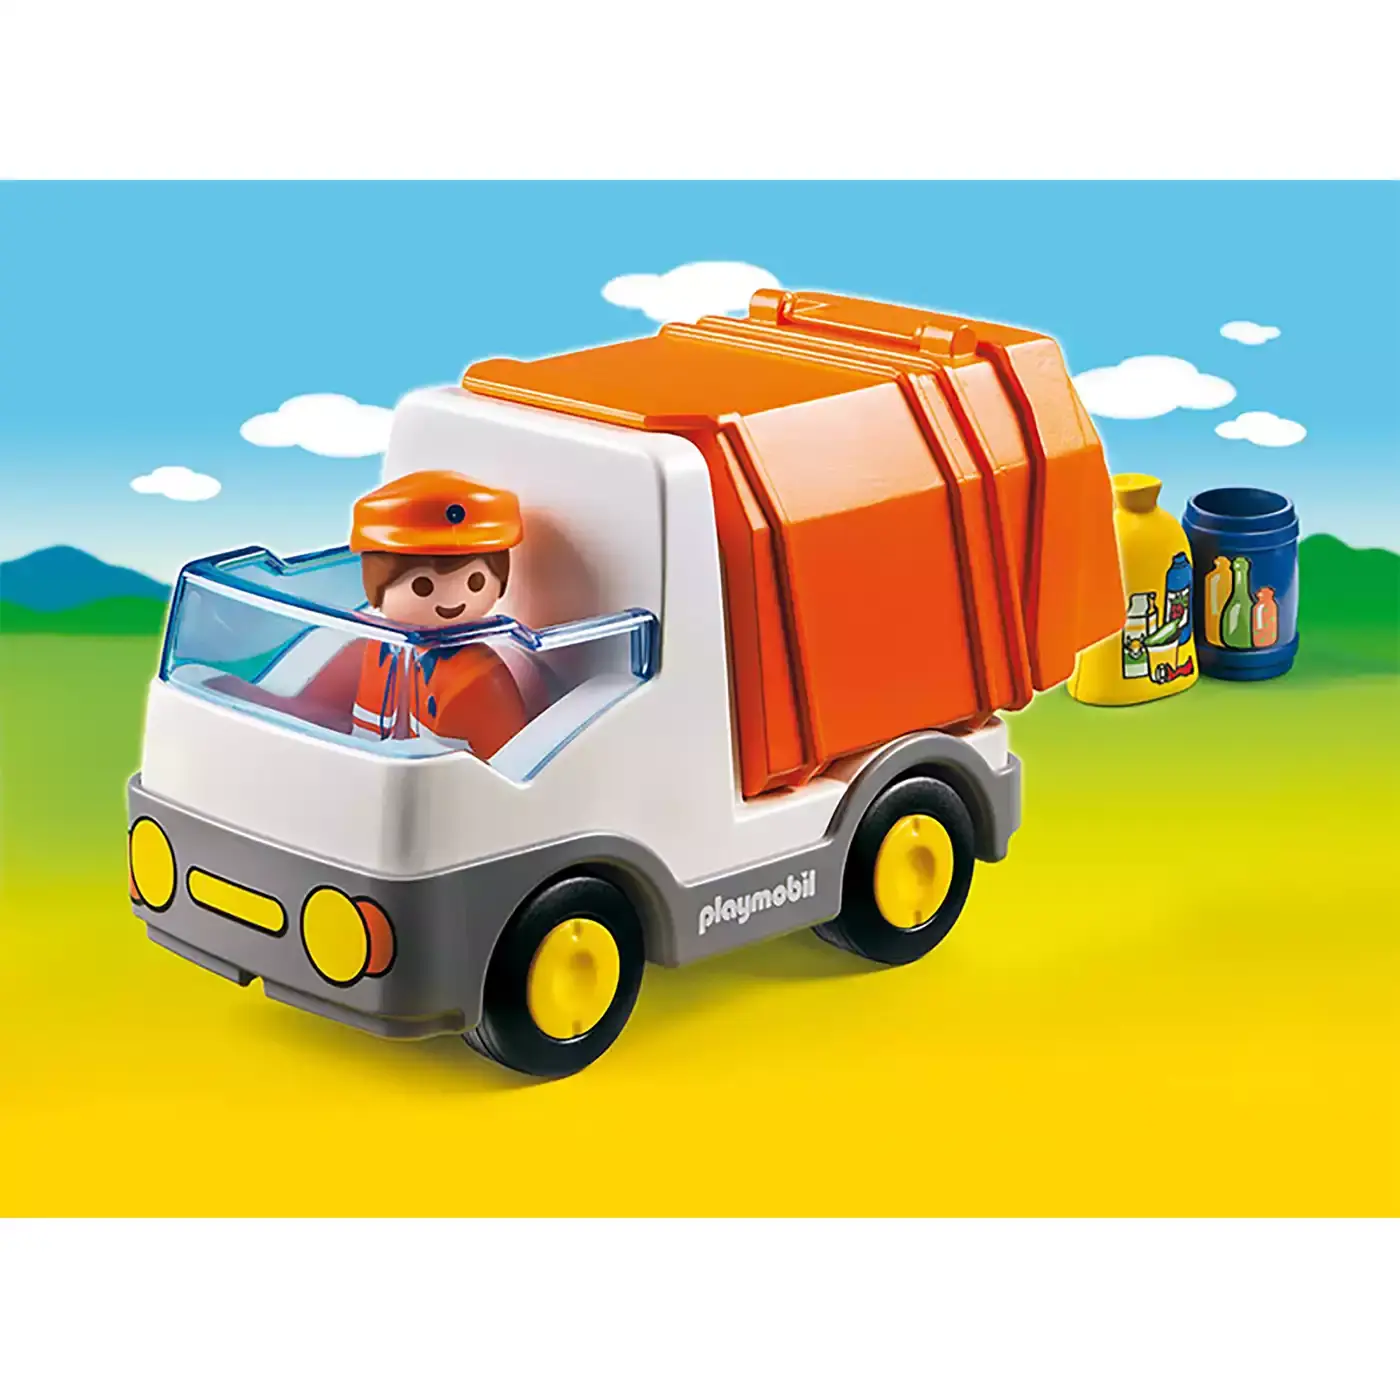 Müllauto 6774 playmobil Orange 2000559025200 3